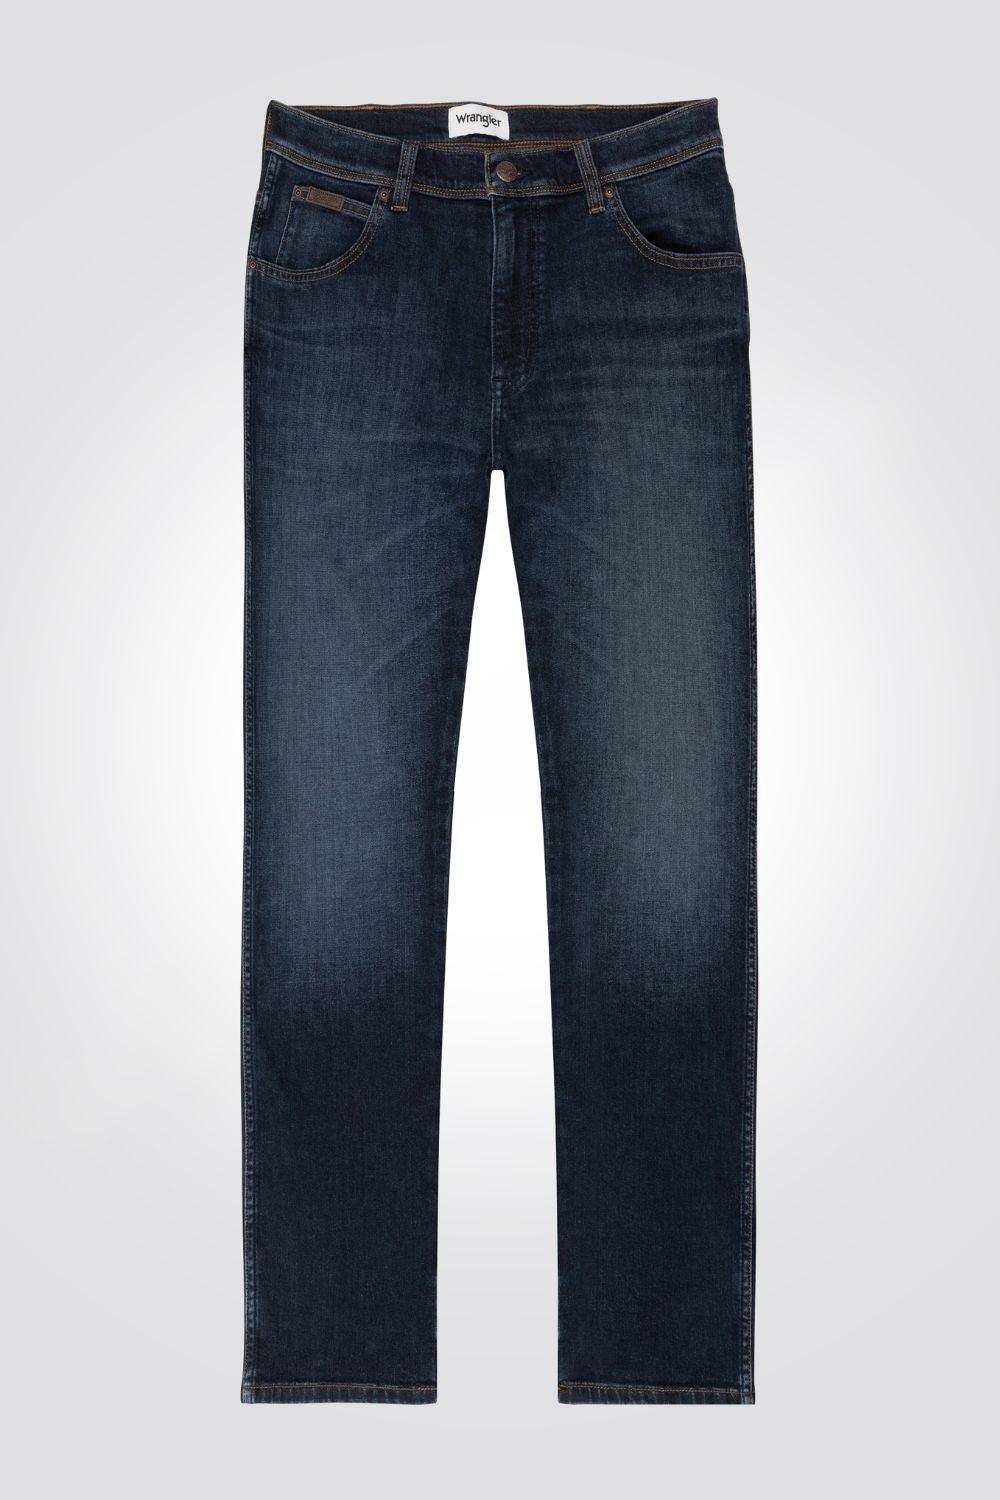 WRANGLER - ג'ינס Denim בצבע כחול כהה - MASHBIR//365